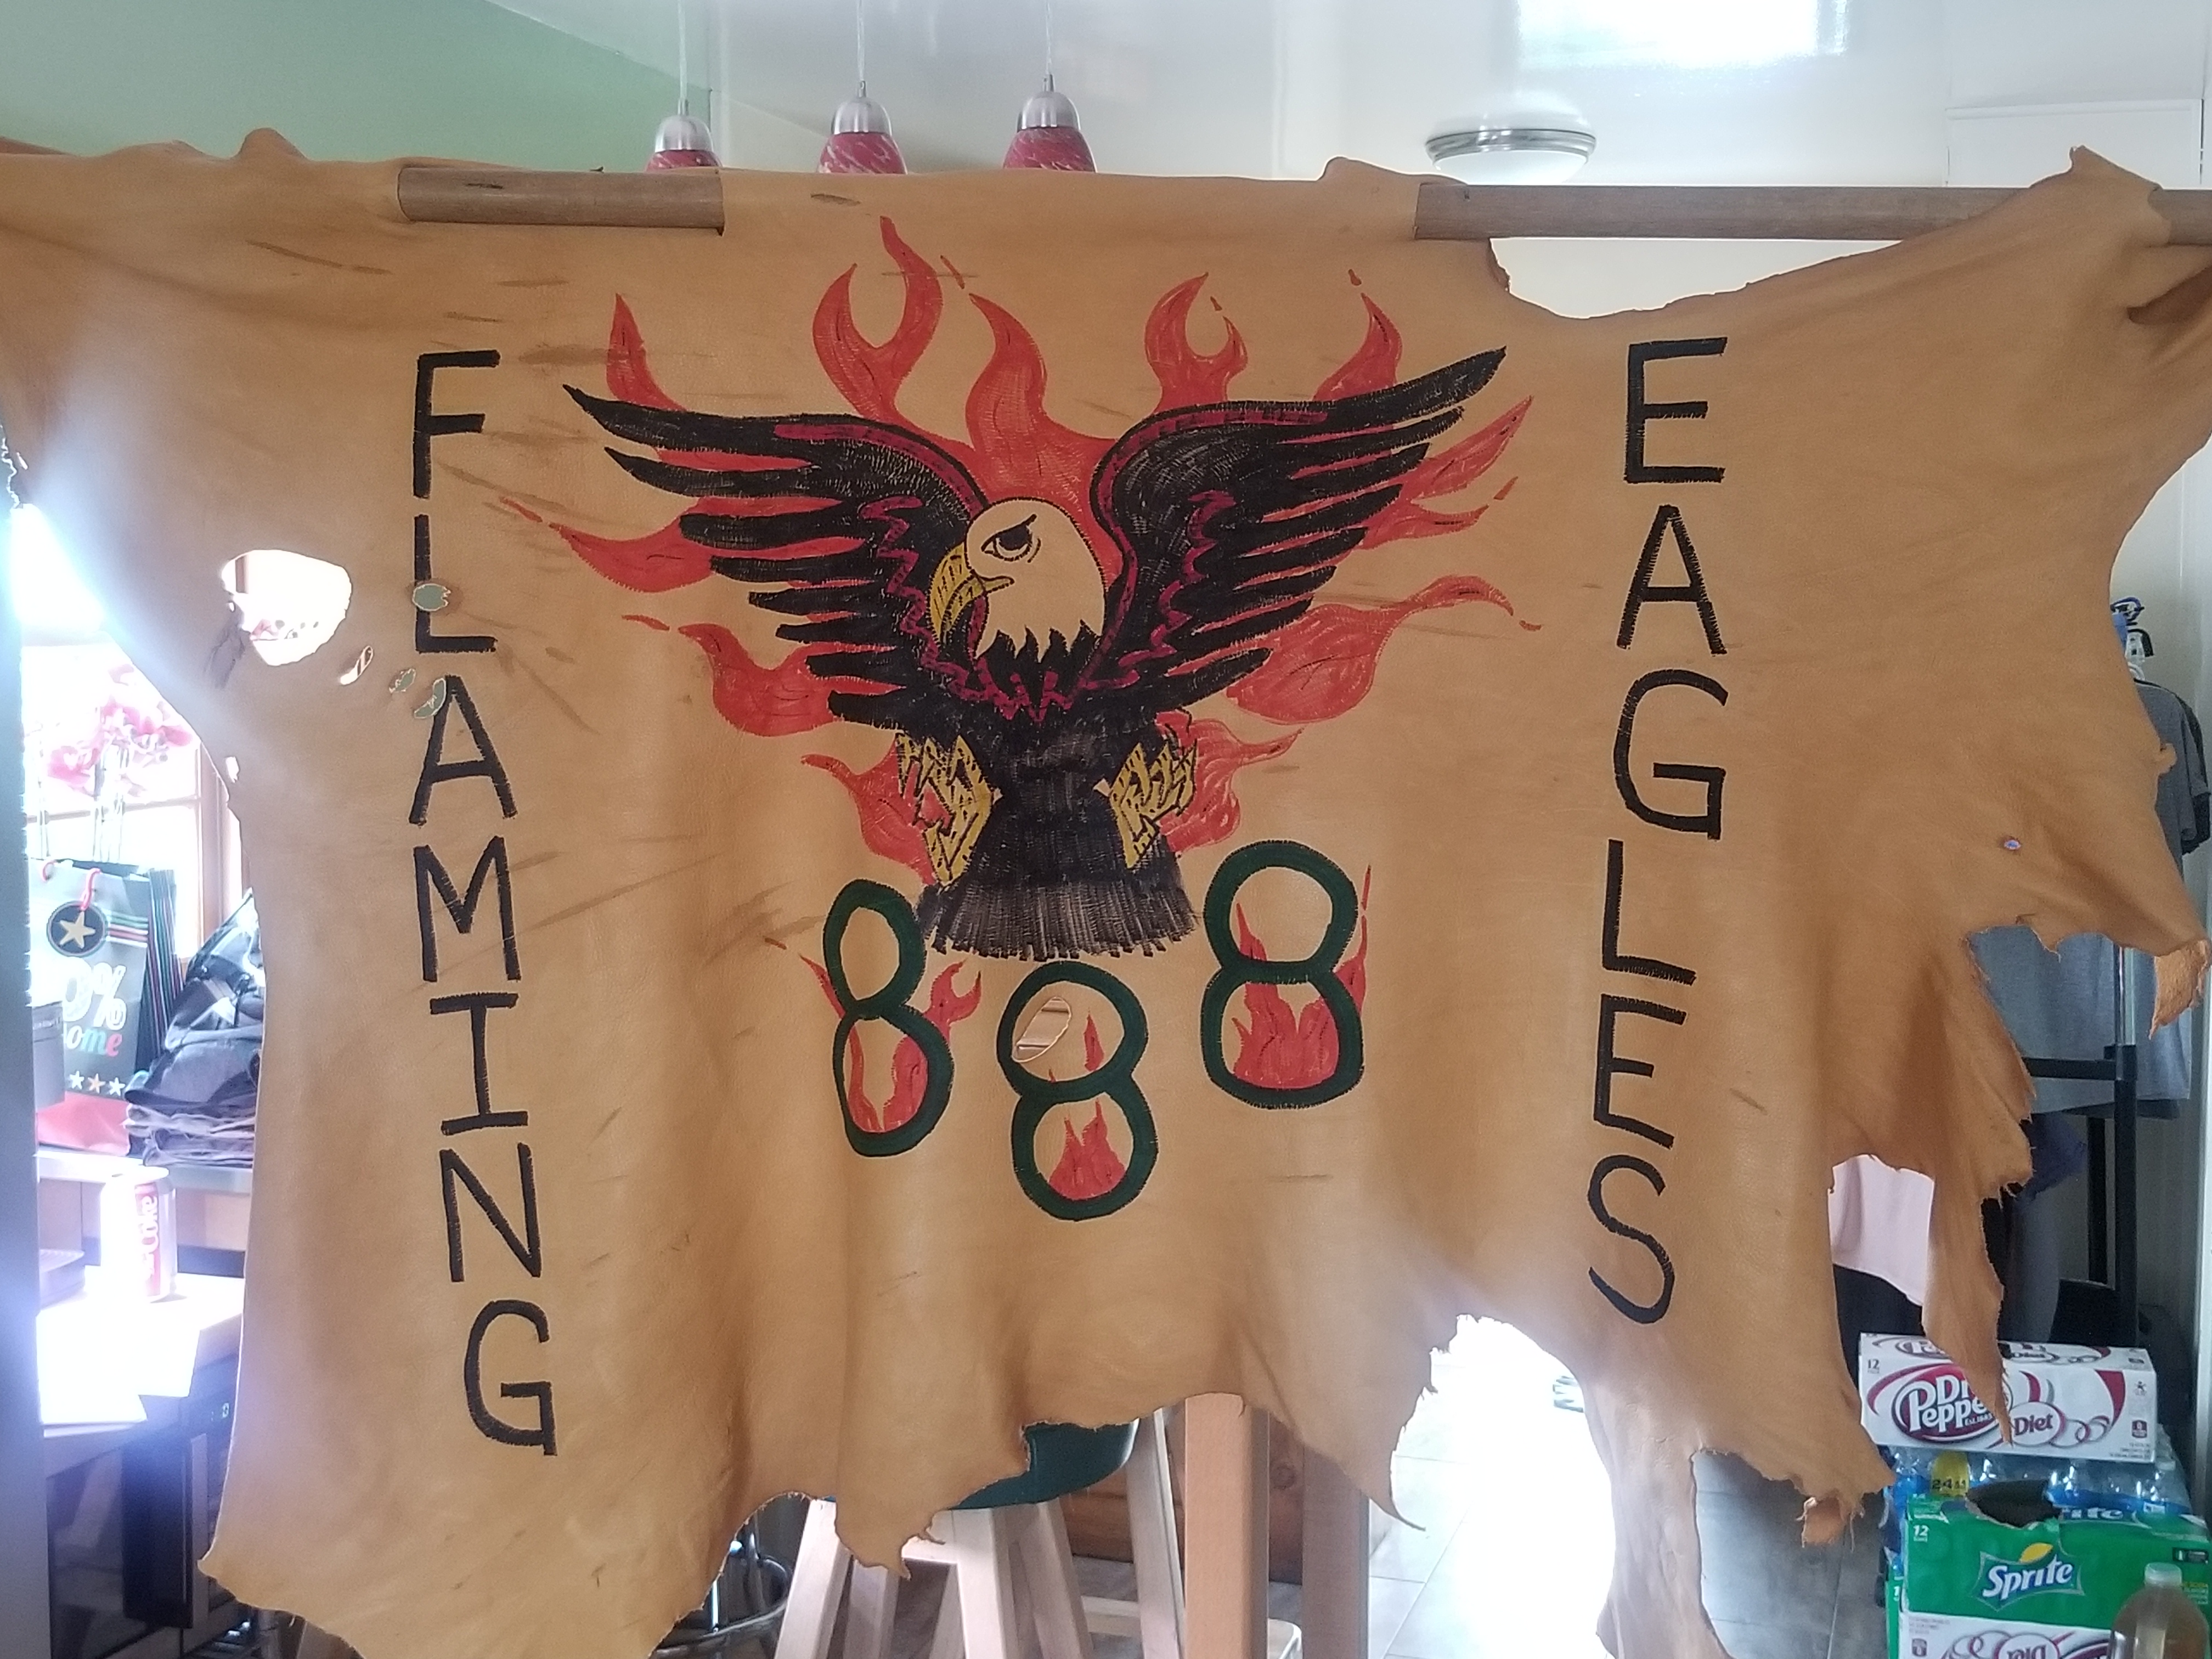 Flaming Eagles Troop 888 Covina, Ca